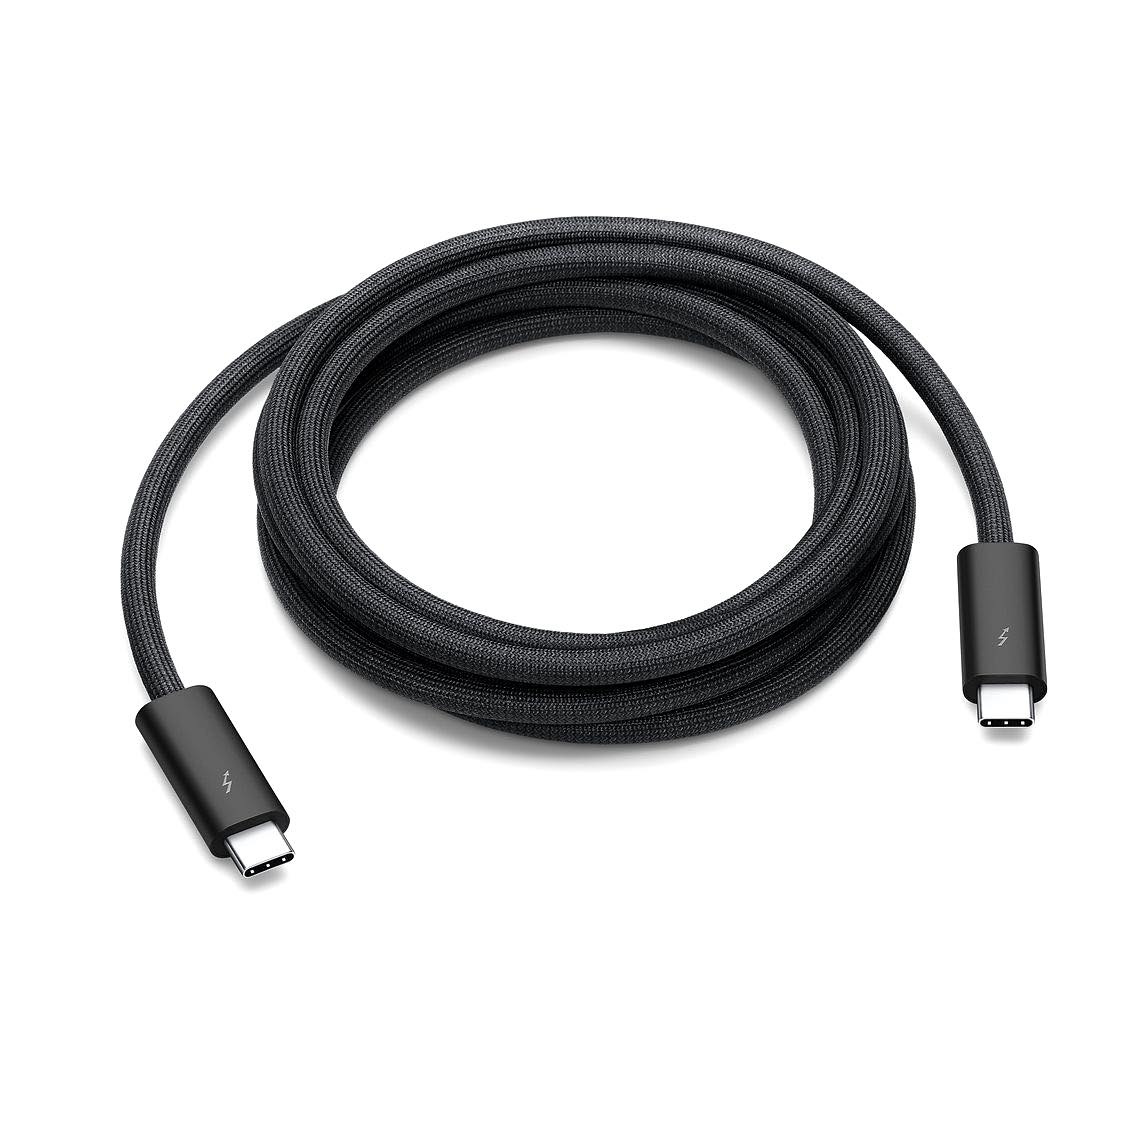 Apple mở bán dây cáp bện Thunderbolt 3 Pro Cable với giá chỉ 129 USD